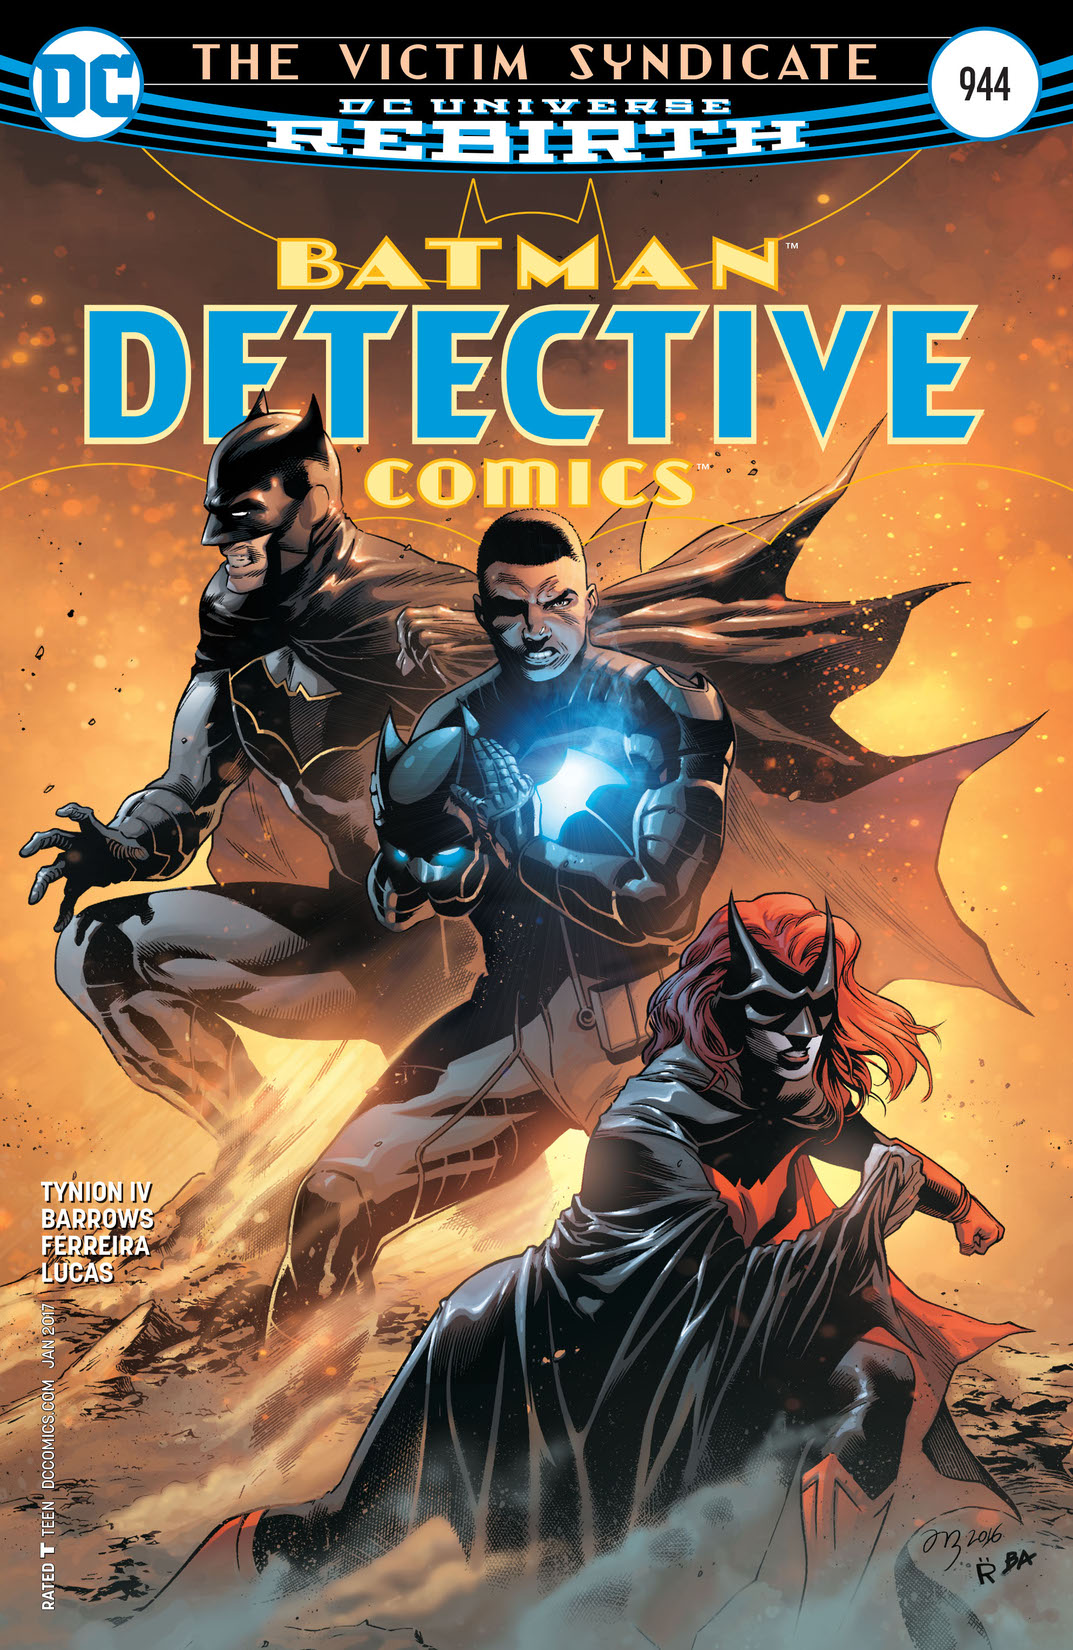 Detective Comics (2016-) #944 preview images